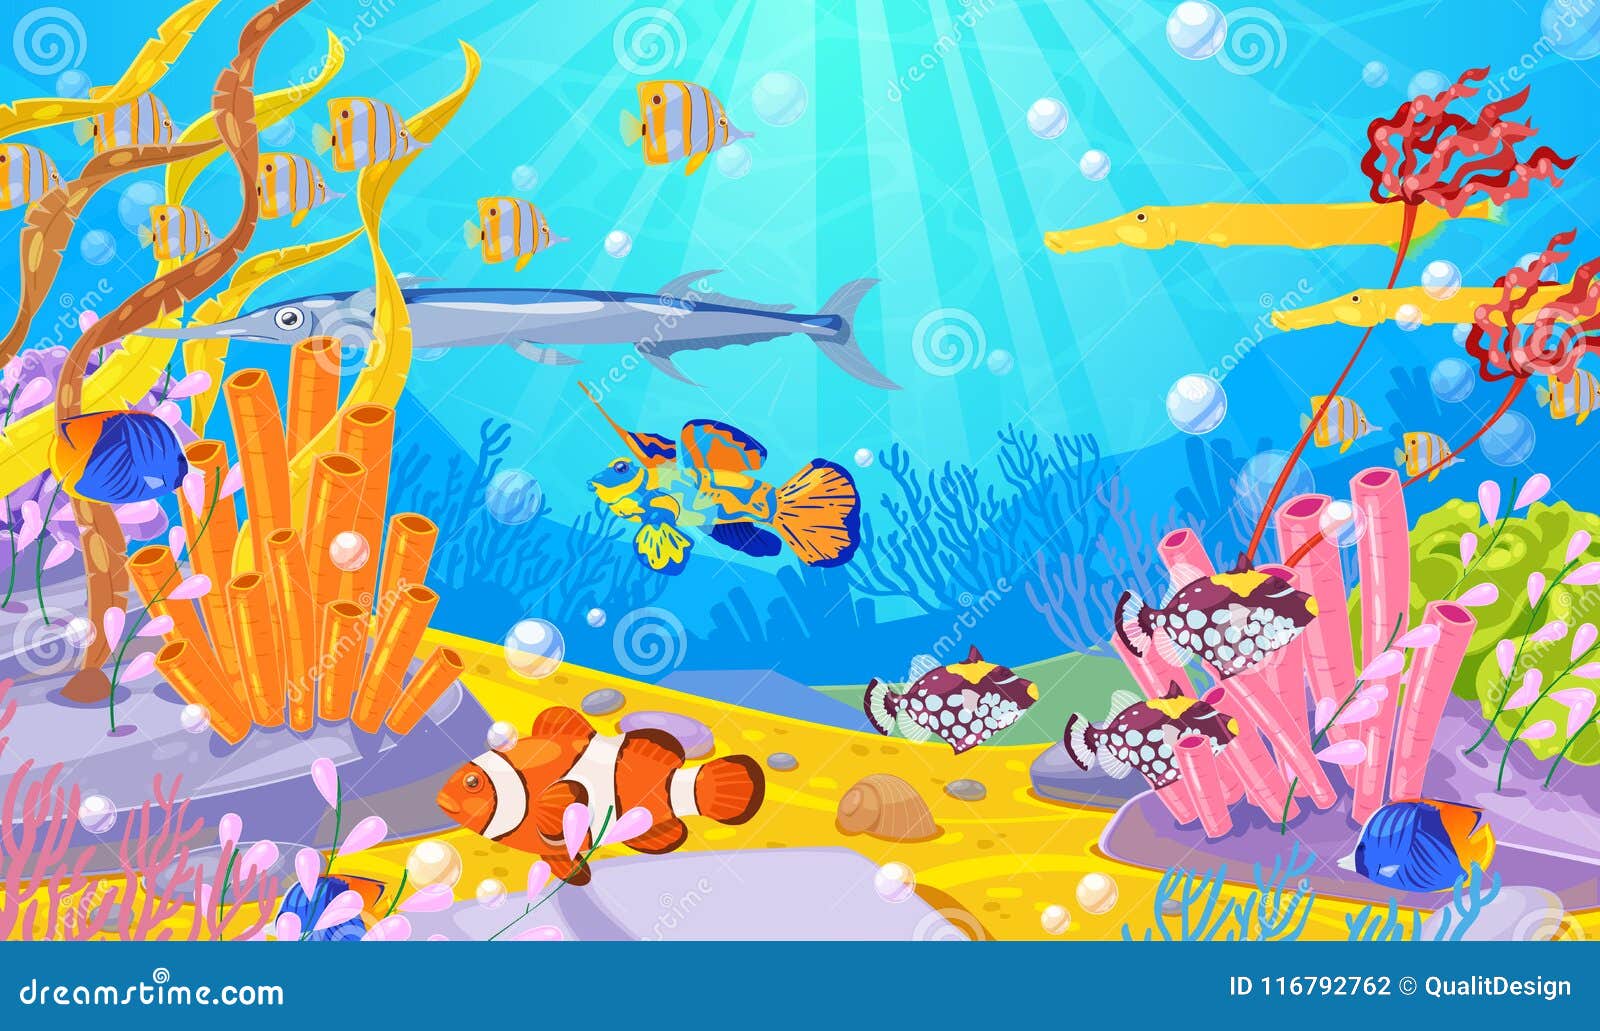 Ambesonne Underwater Table Runner 16 X 120 Multicolor Childish Fishes Waves Starfish Cartoon Swimming Deep Sea Marine Life Creatures Dining Room Kitchen Rectangular Runner